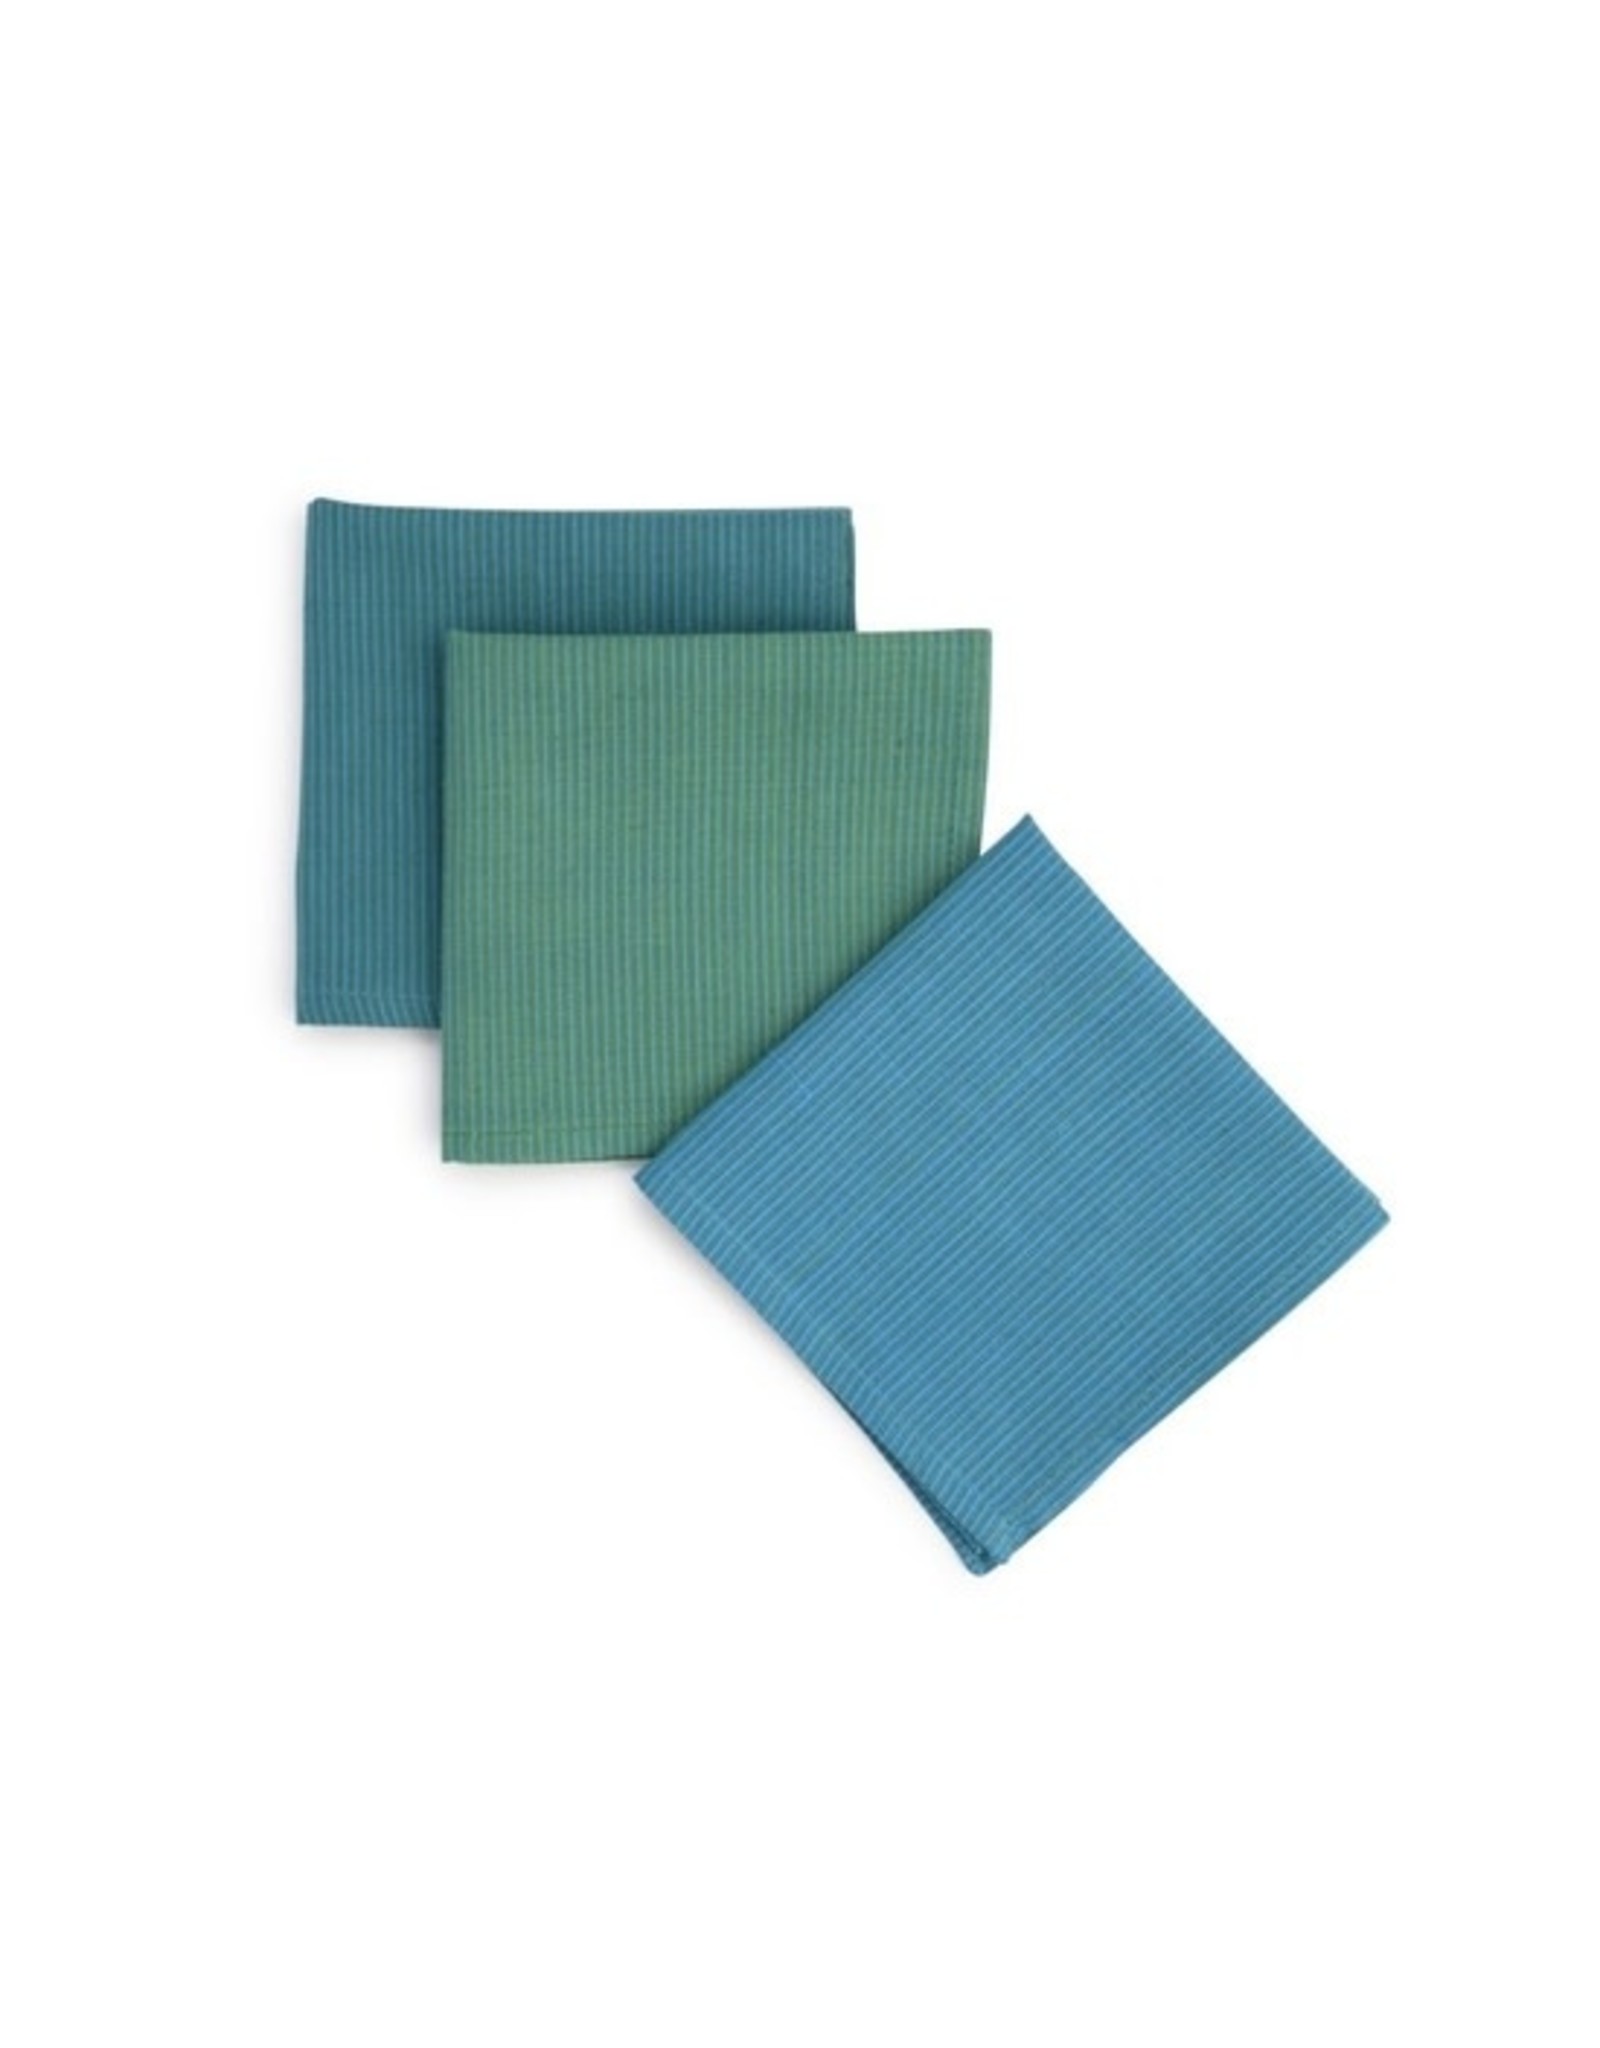 9 x 9 Cotton Handkerchief Charlotte, SET of 3, India